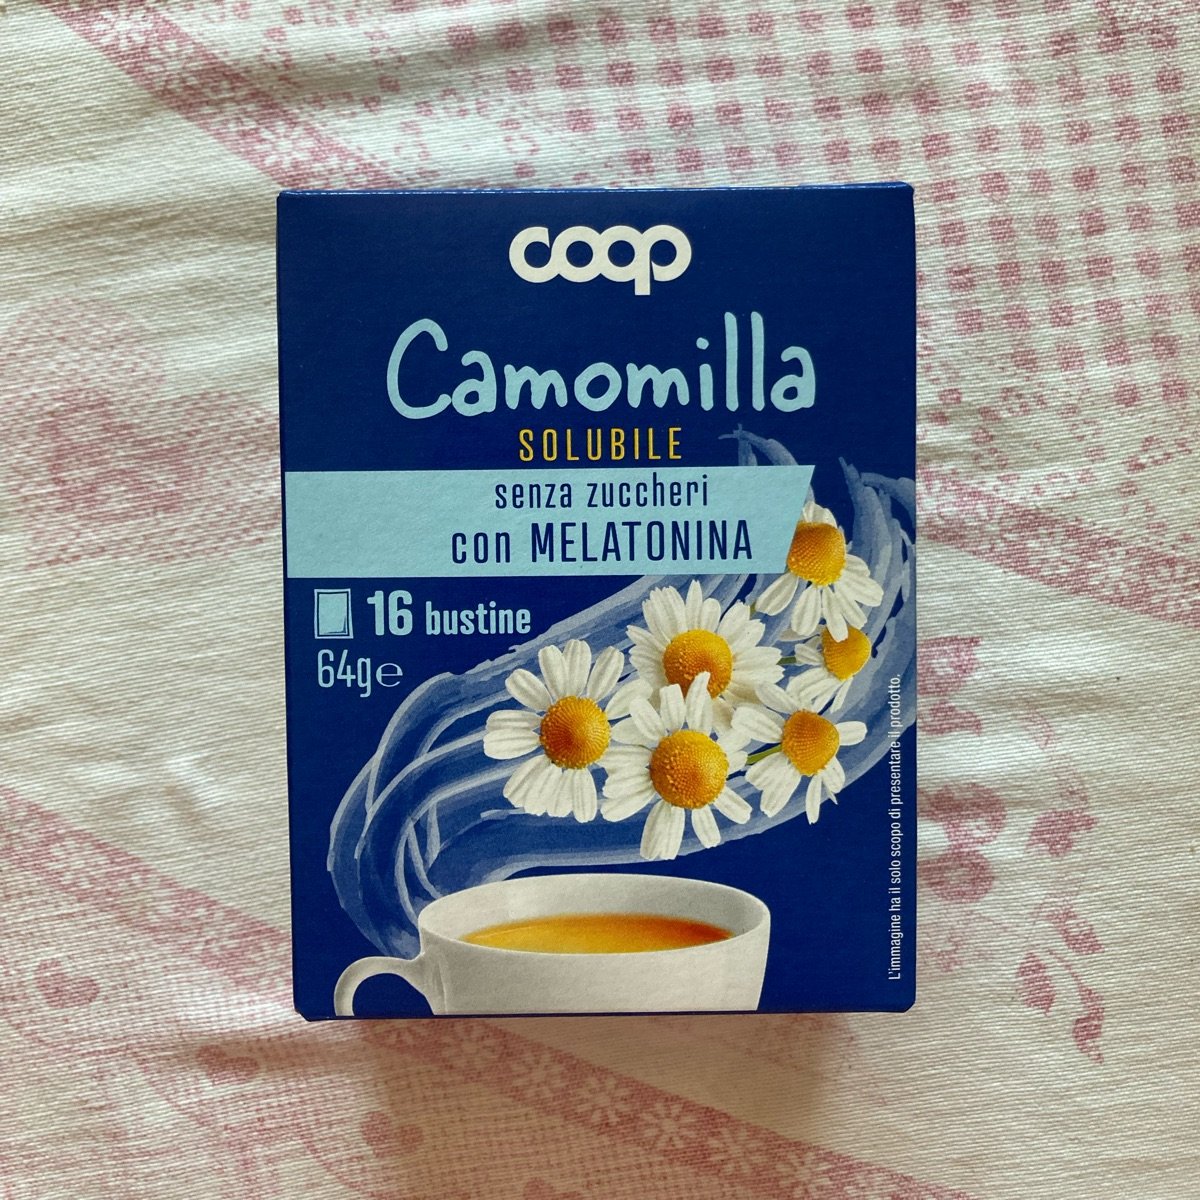 Coop Camomilla solubile con melatonina Reviews